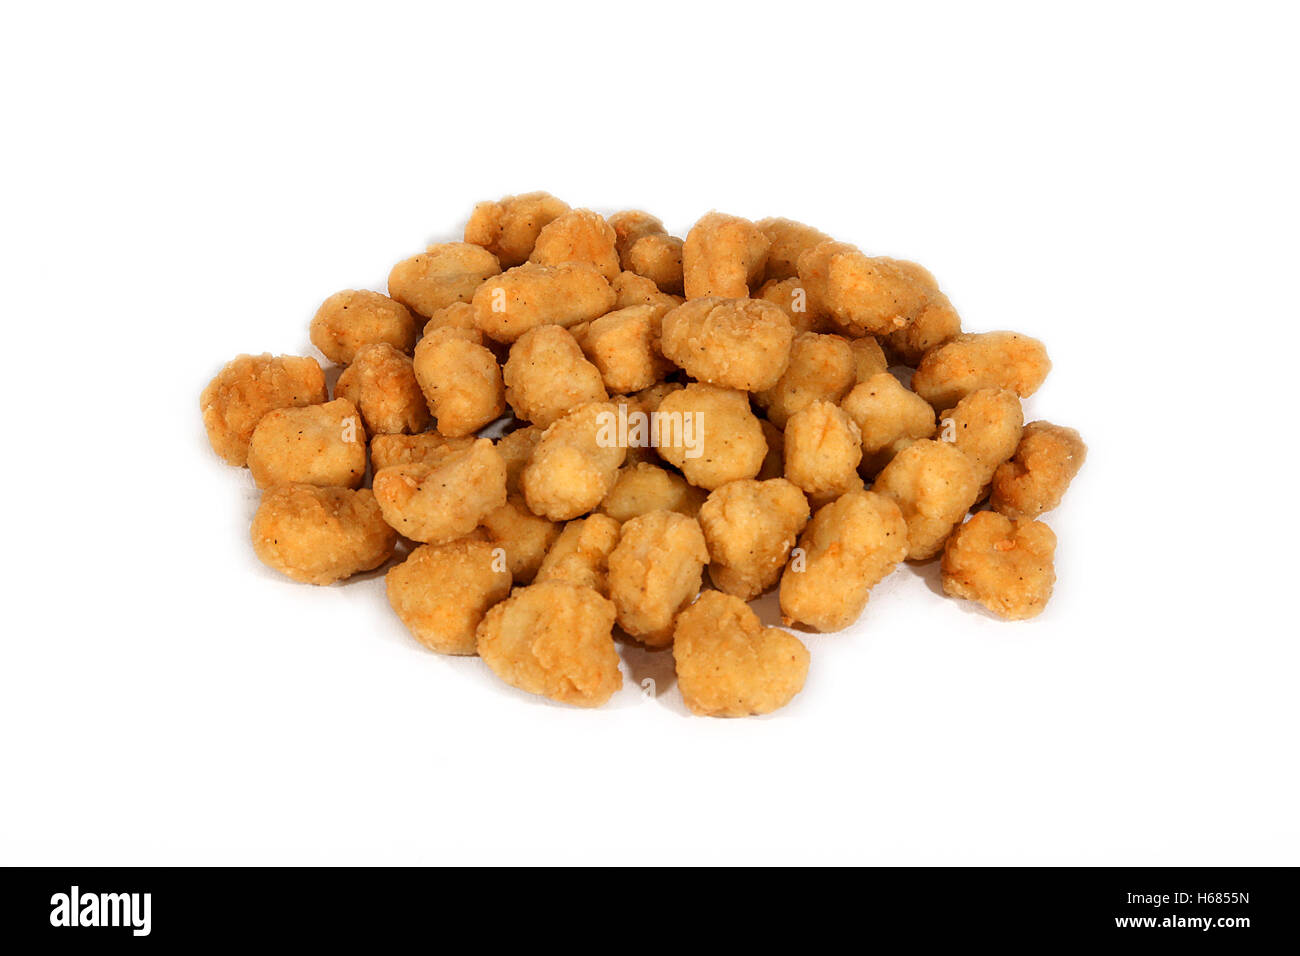 Fried Chicken / Southern Fried Chicken / Popcorn Chicken Stock Photo